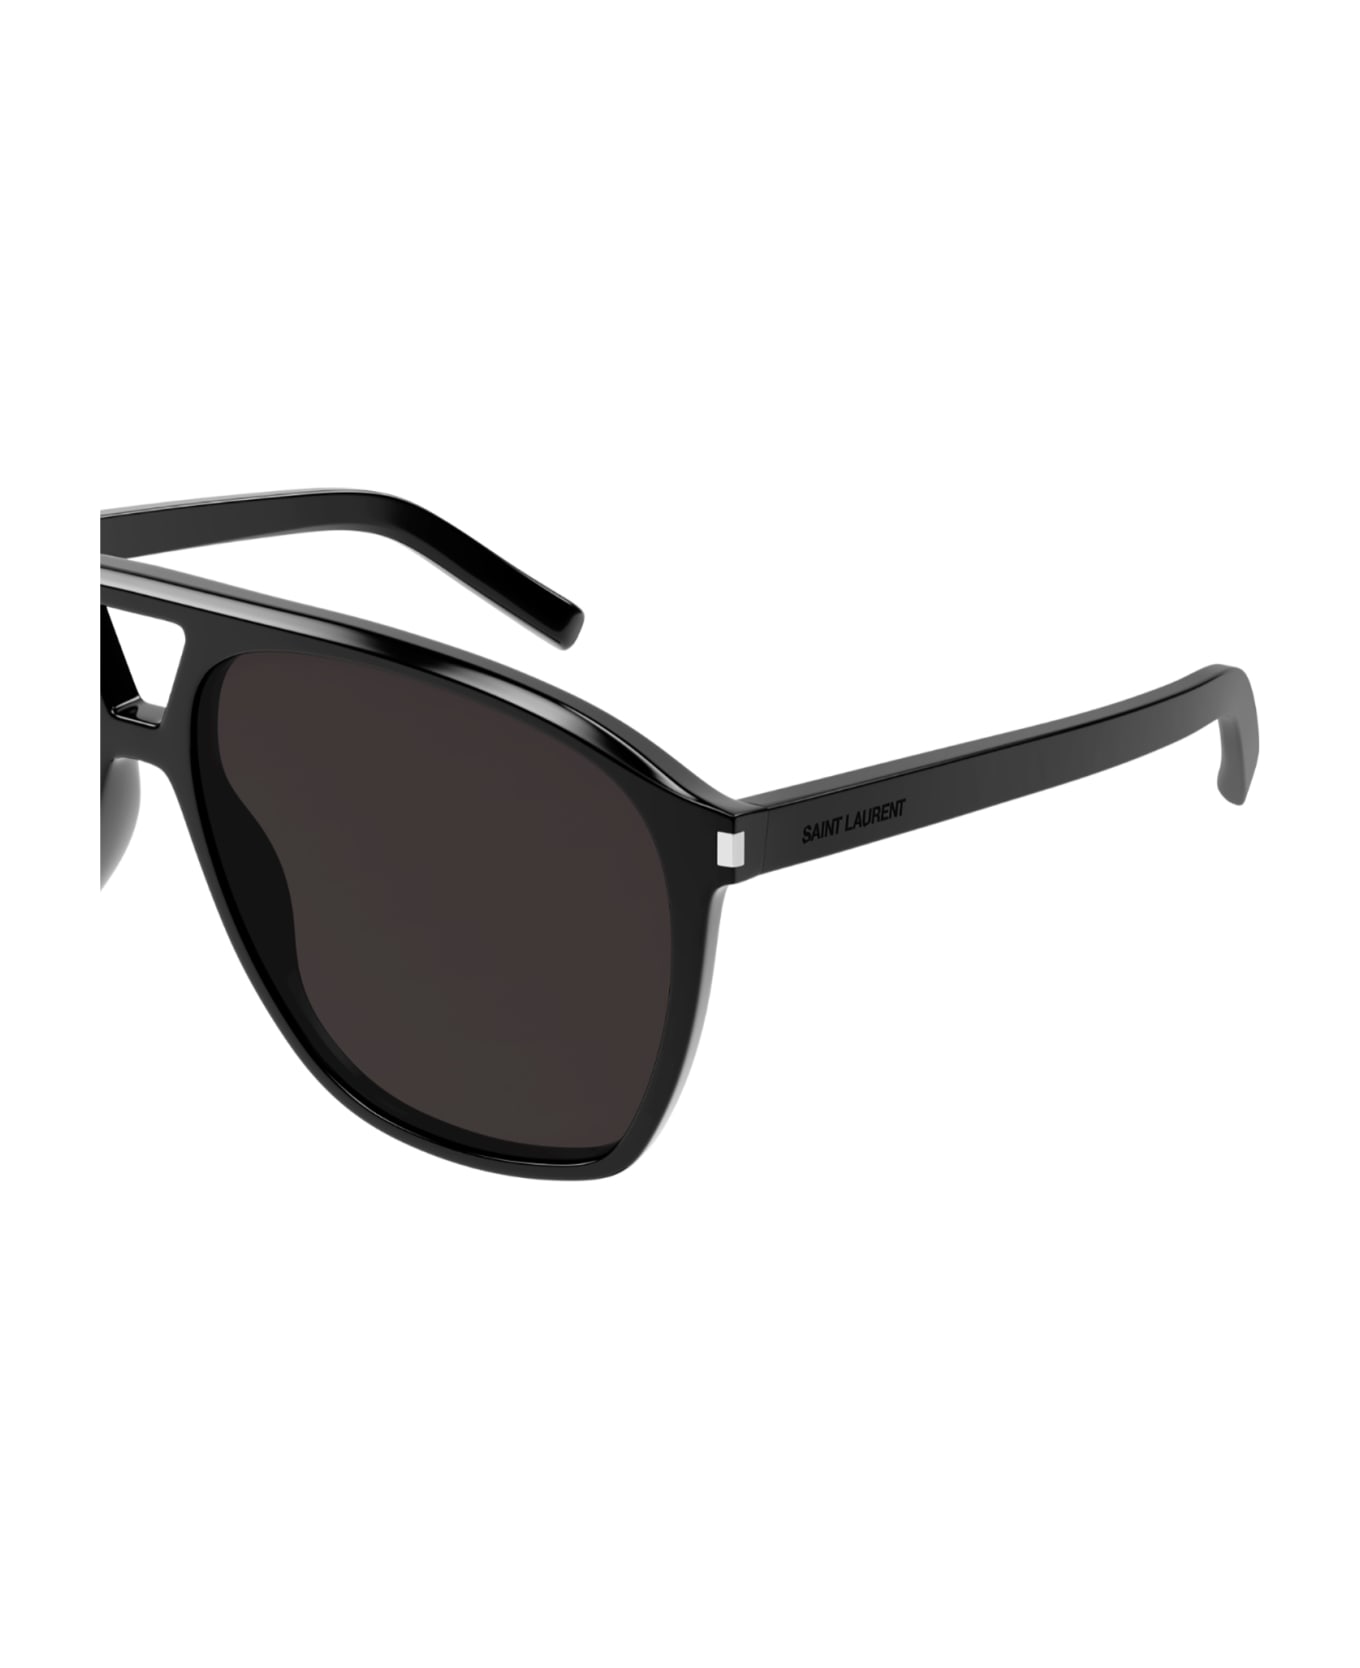 Saint Laurent Eyewear 1f944lg0a - Julbo Line Sunglasses